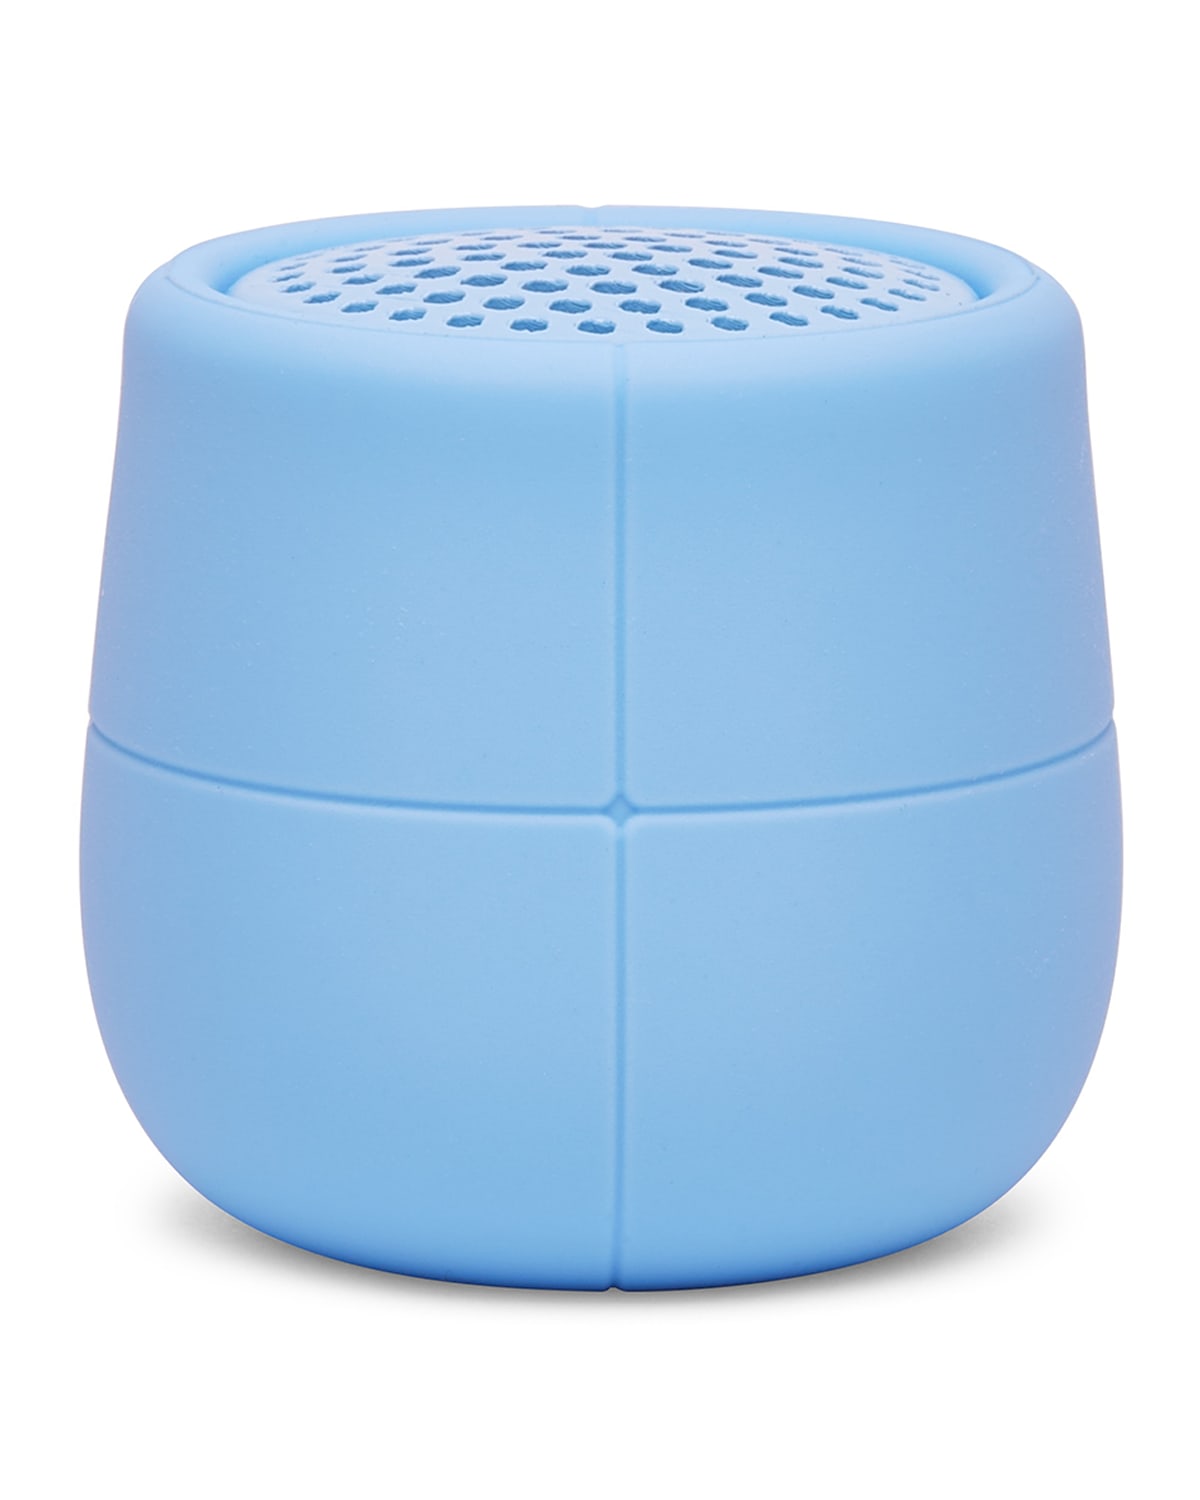 Lexon Design Mino X Water Resistant Floating Bluetooth Speaker In Rubber Blue